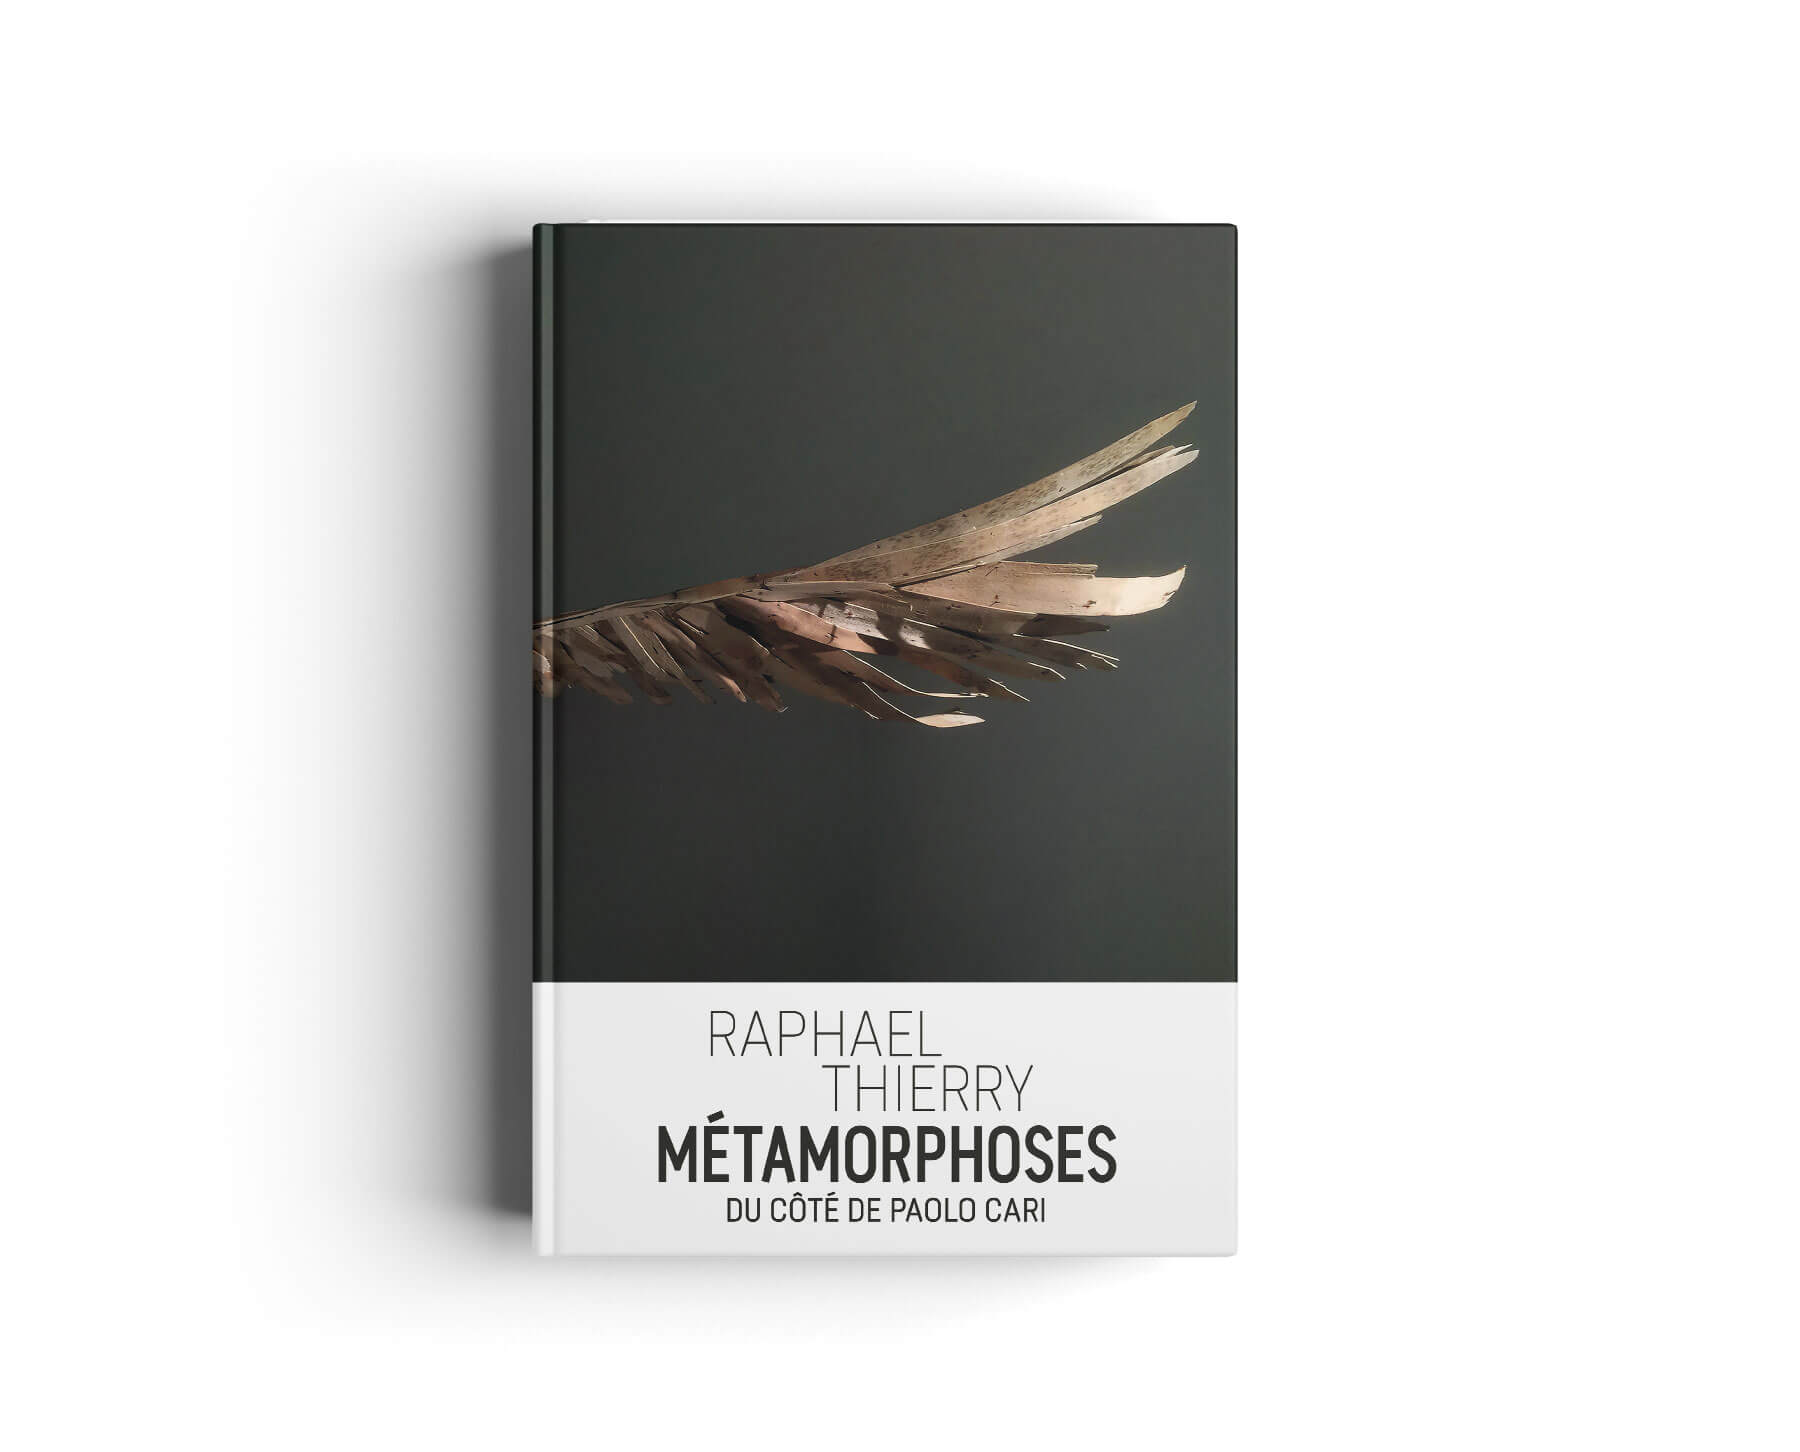 catalogue-metamorphoses-paolo-cari-raphael-thierry-b